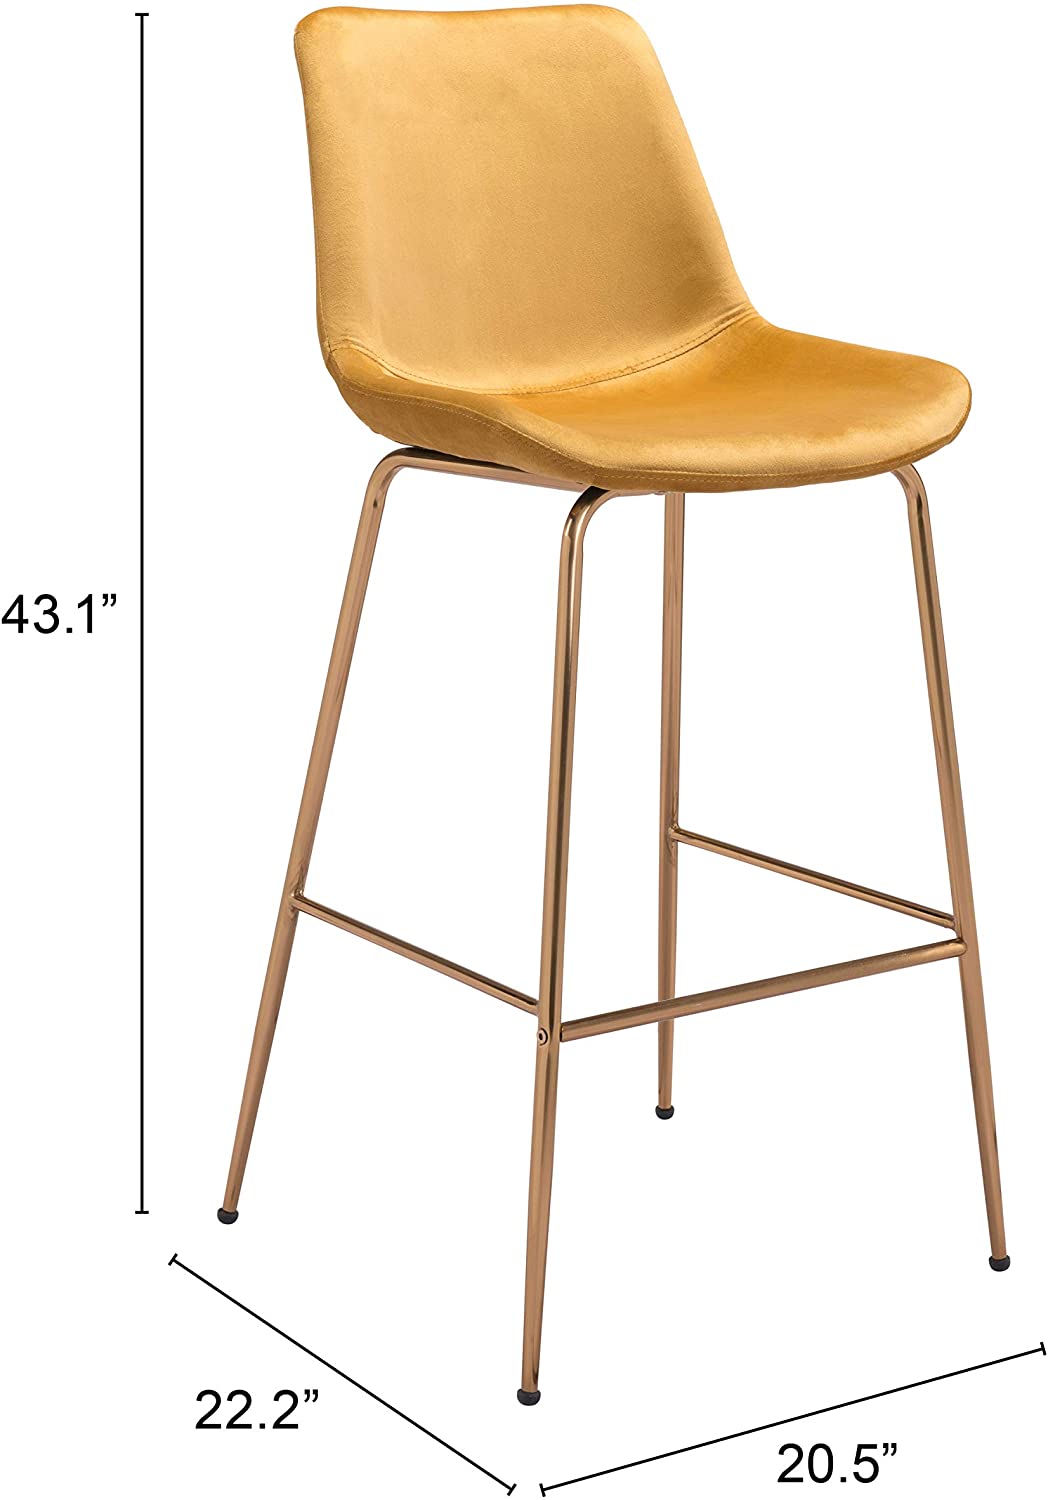 Billinton Bar Chair - Canary Yellow/Gold